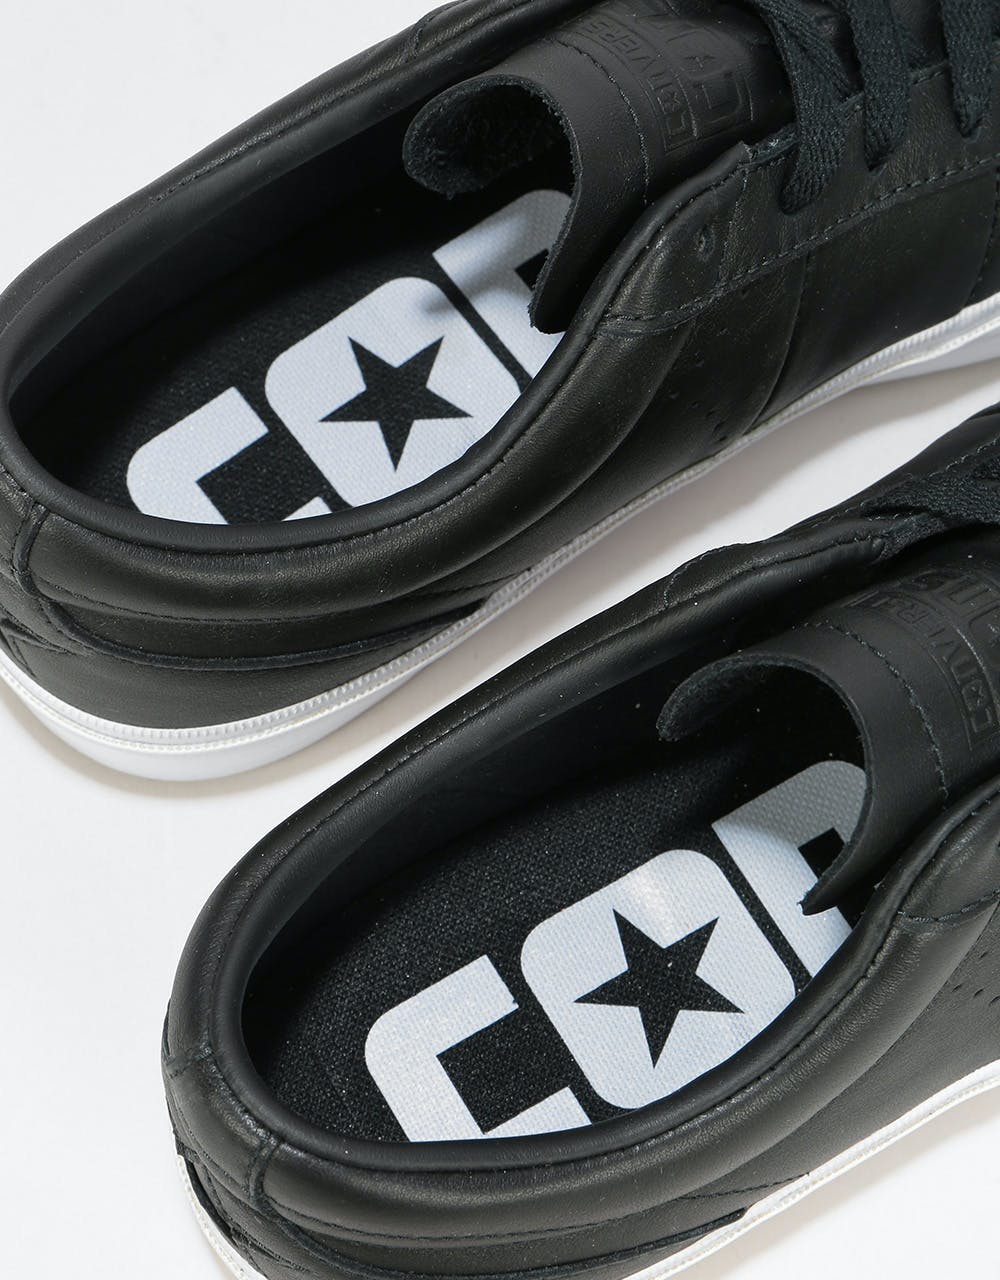 Converse One Star CC Pro Ox Skate Shoes - Black/Black/White